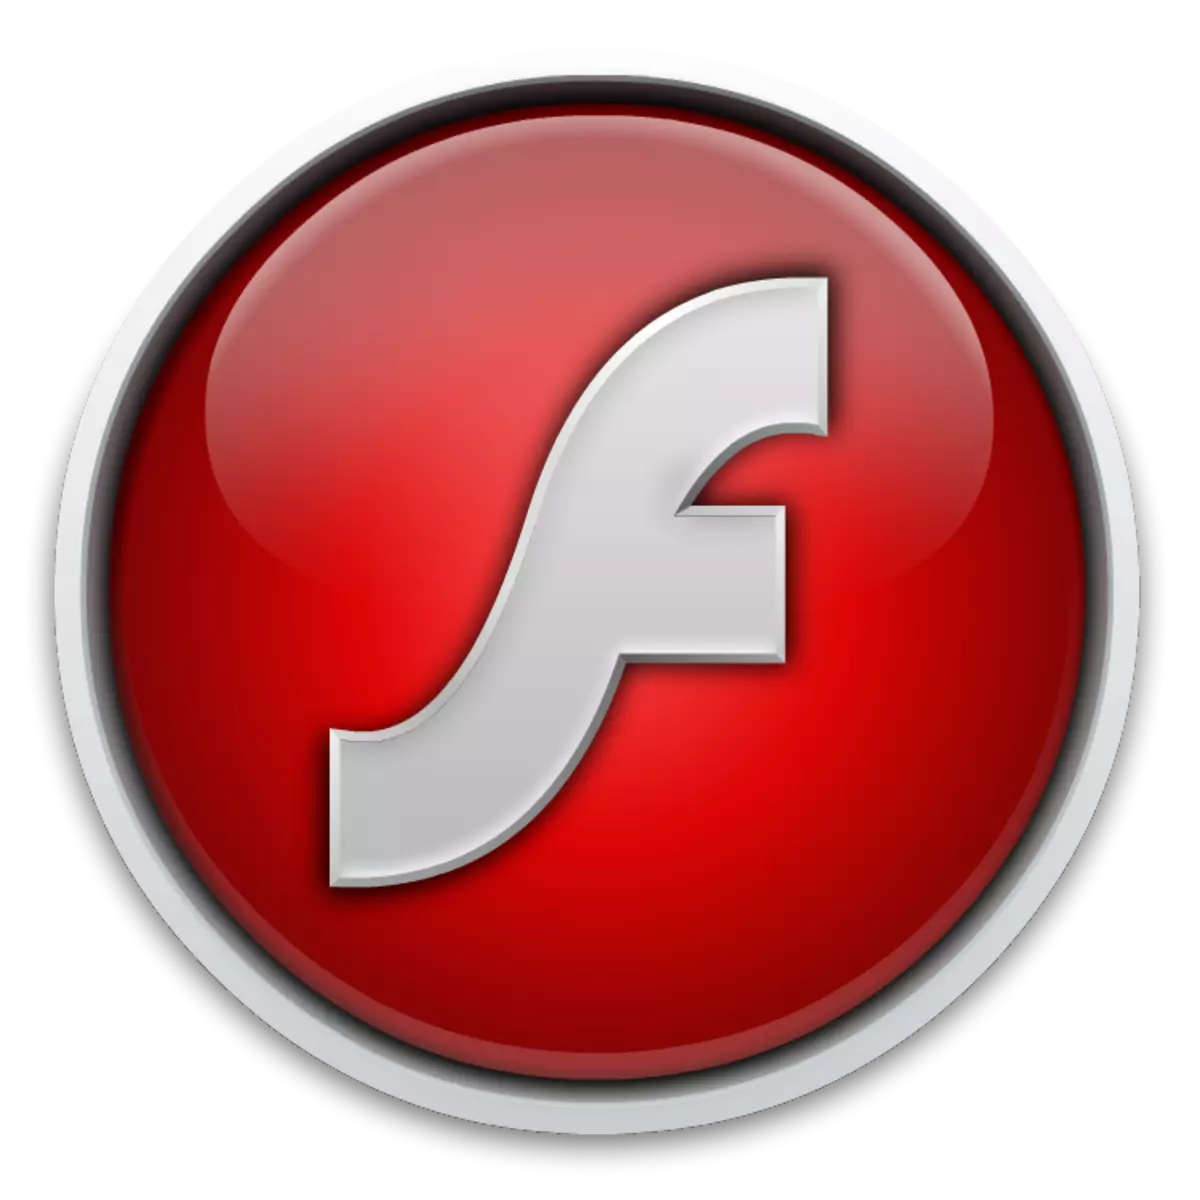 Kuvugurura Adobe Flash Player Player ya Operaser